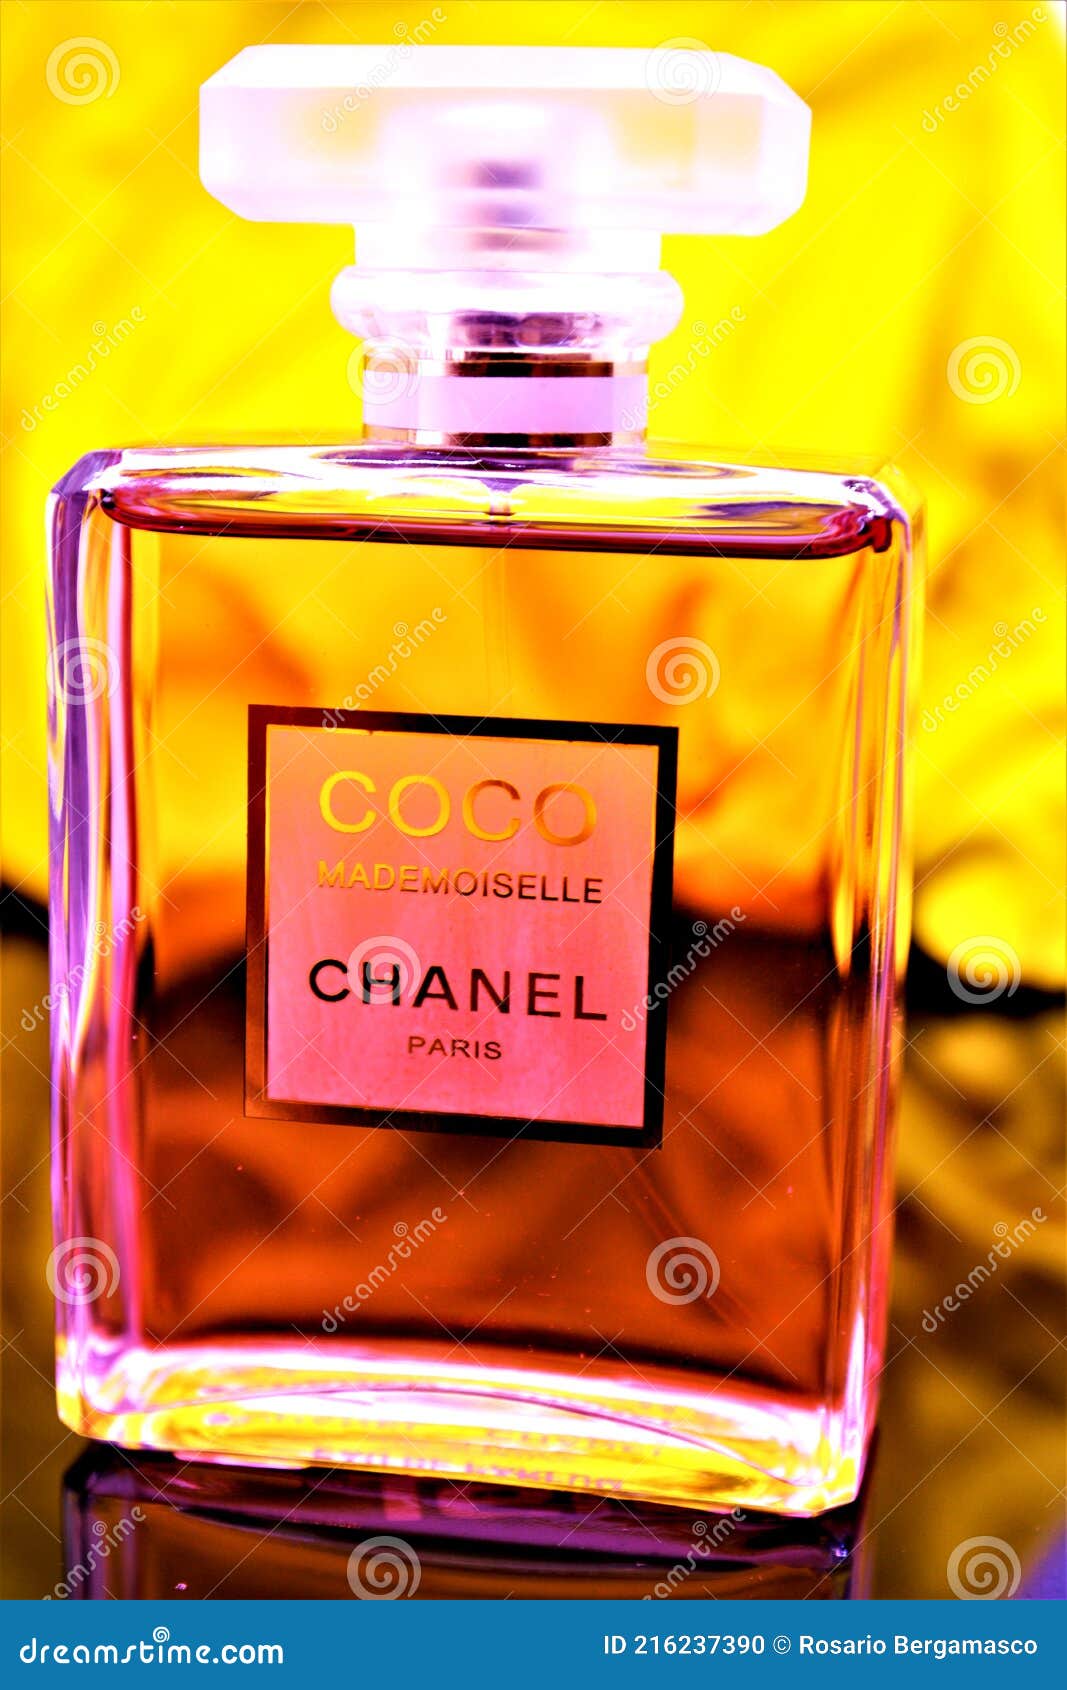 Perfume Coco Chanel Elegant for Women Fashion Aroma Editorial Image ...